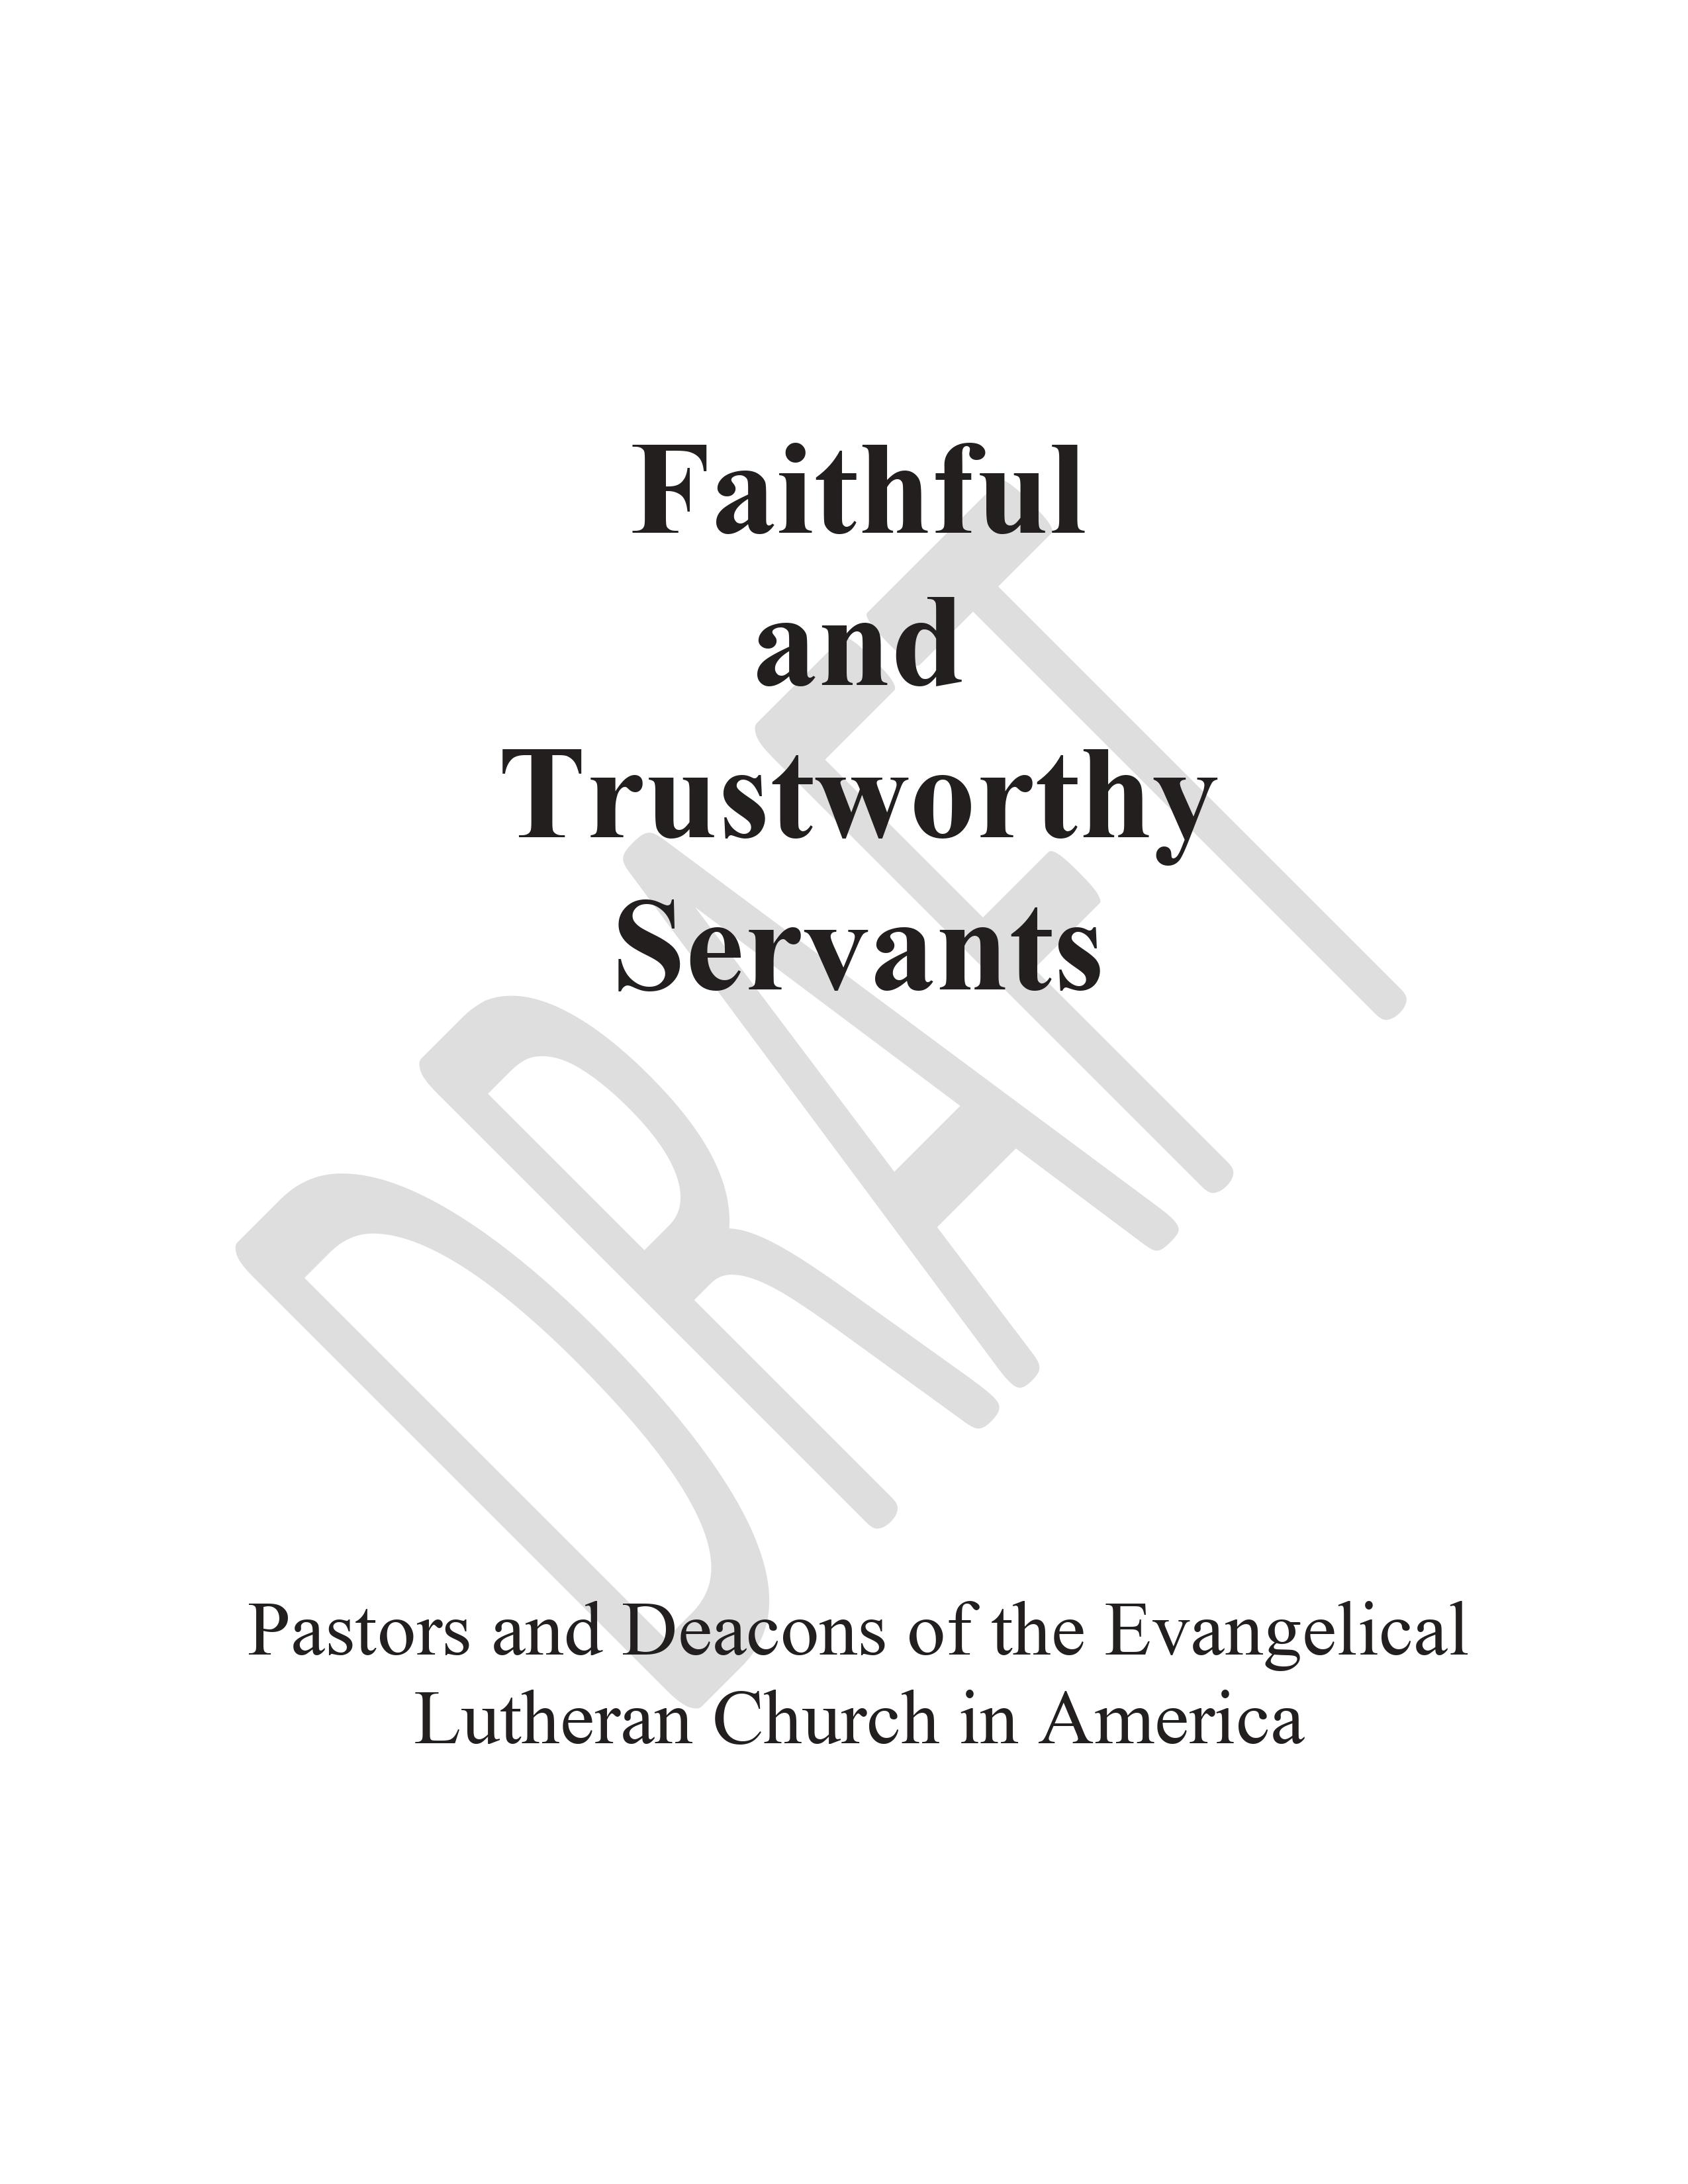 Faithful and Trustworthy Servants